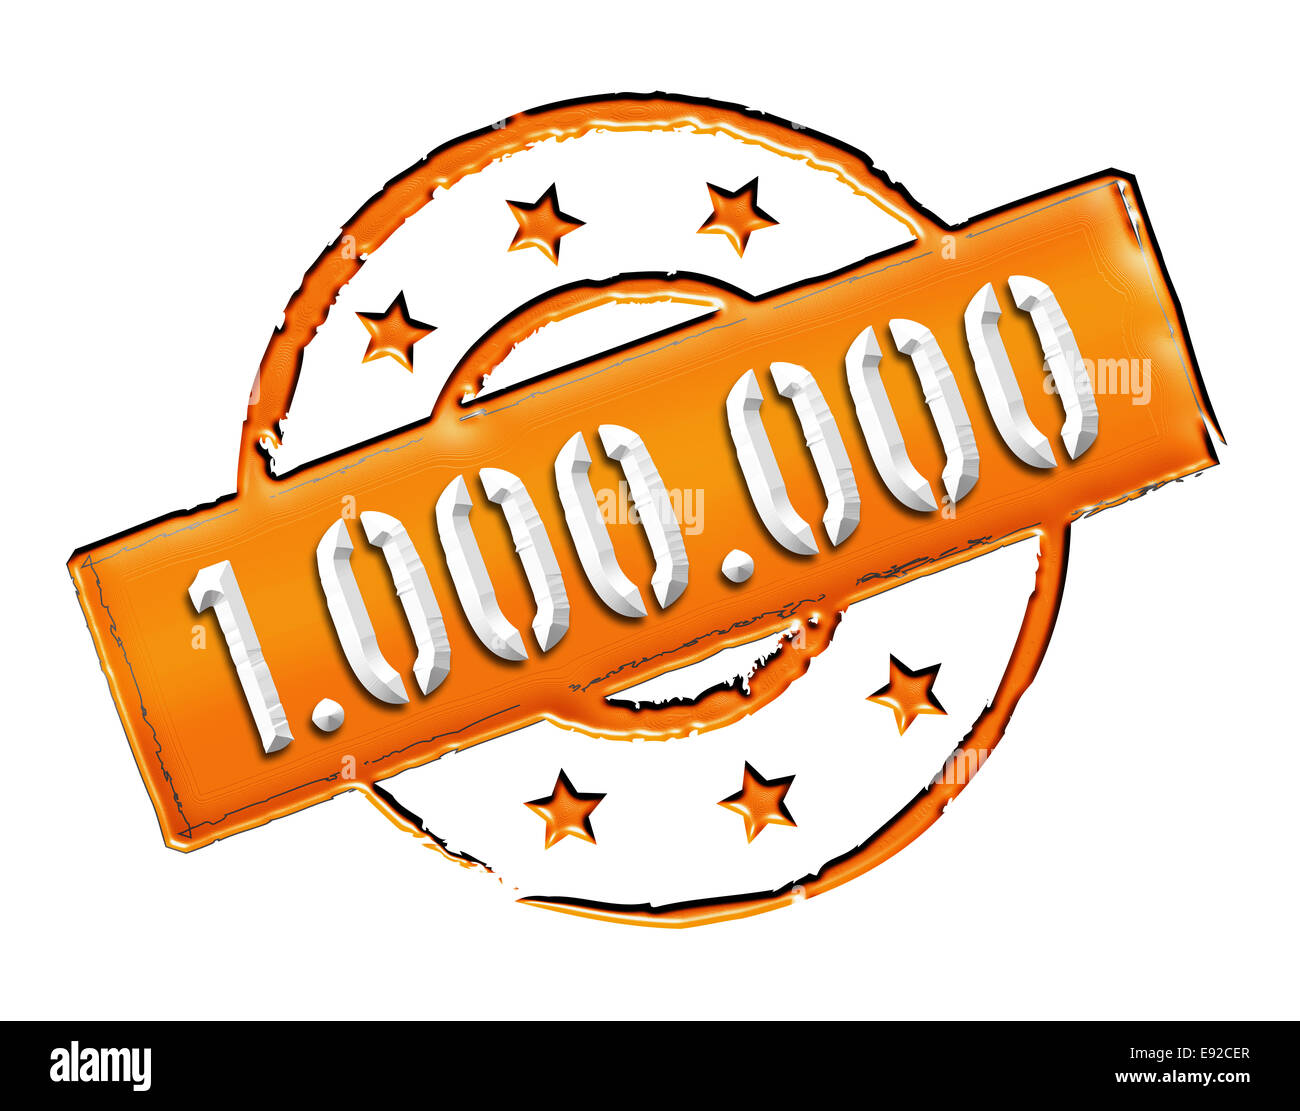 Stamp - 1.000.000 Stock Photo - Alamy